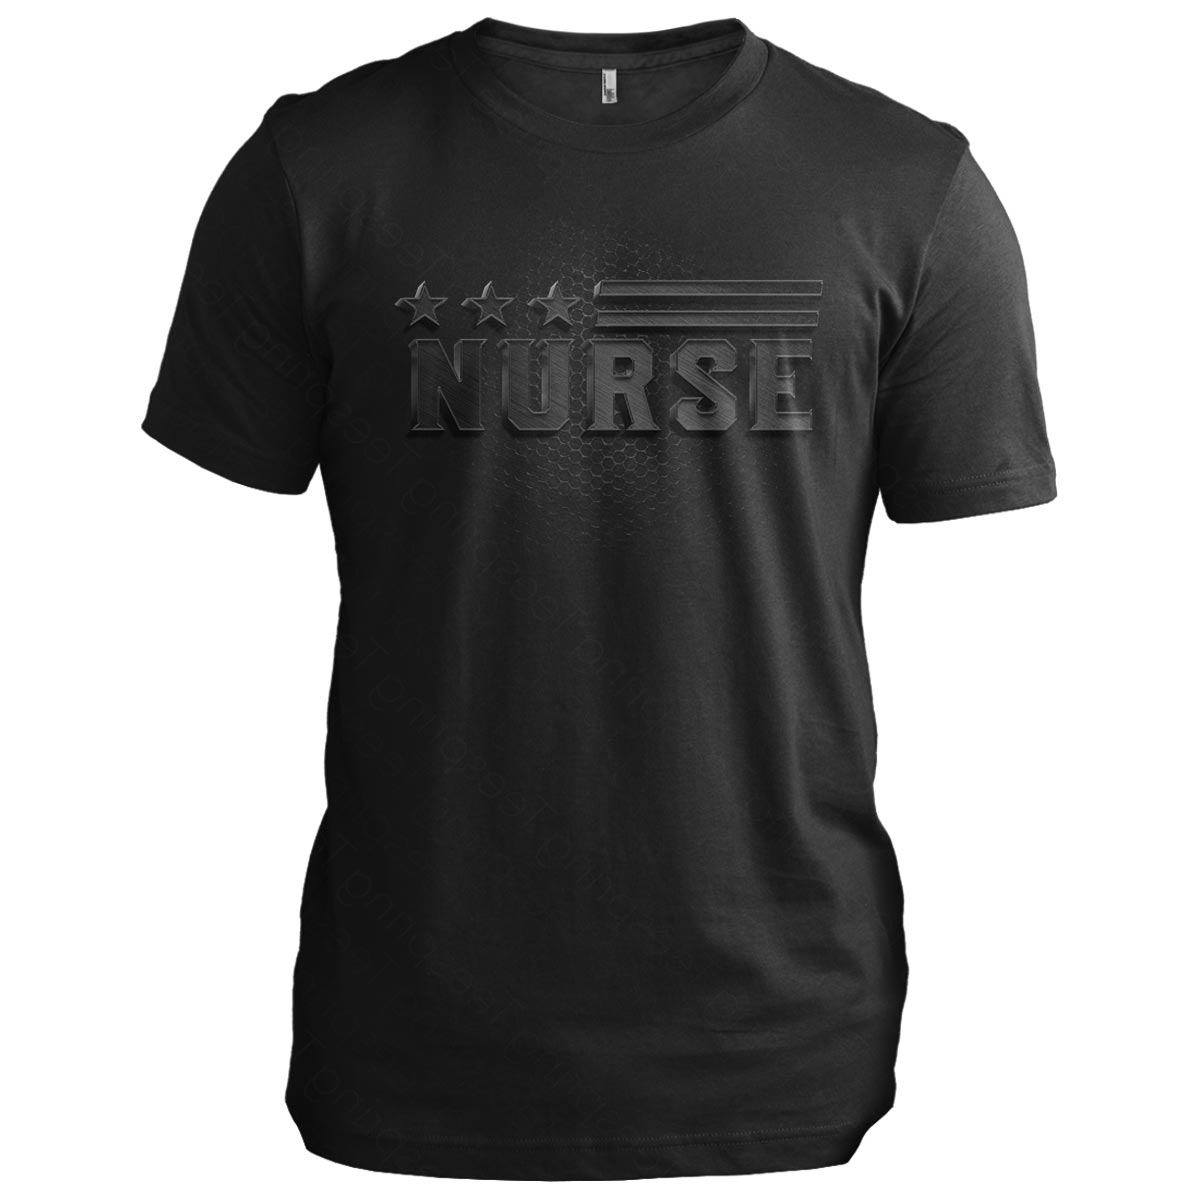 Nurse Black Carbon